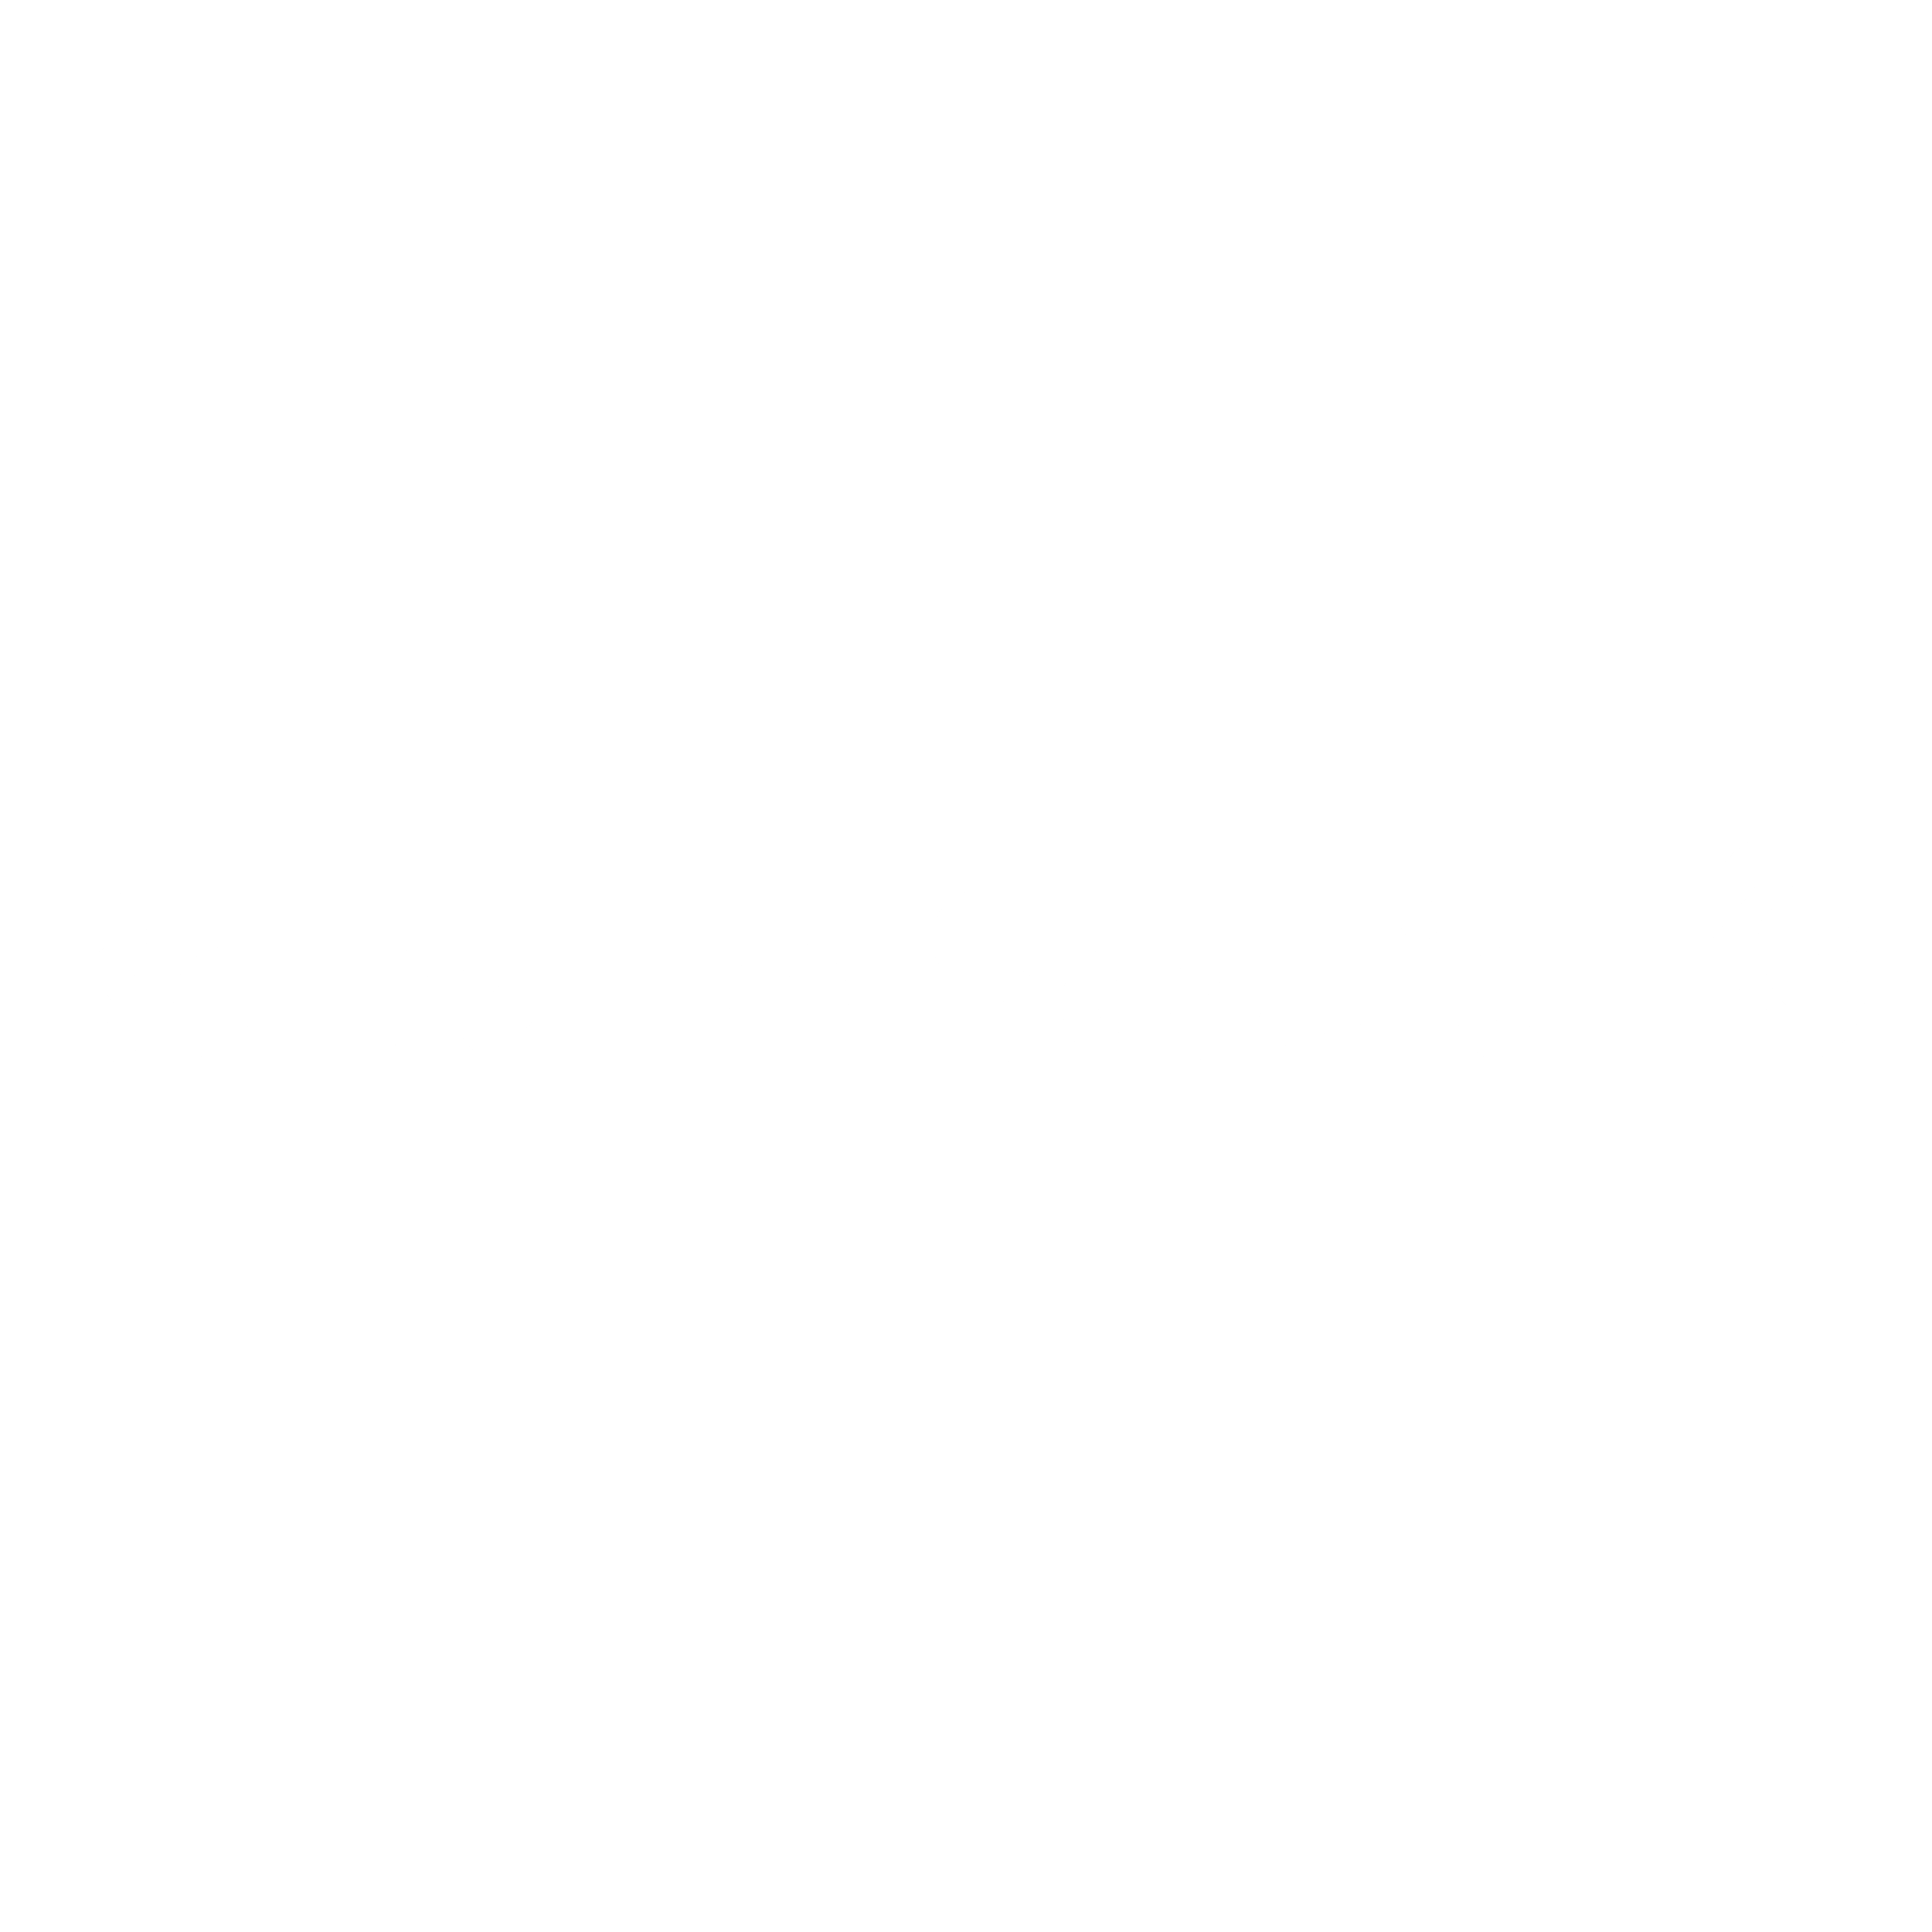 banque-scotia-logo-black-and-white